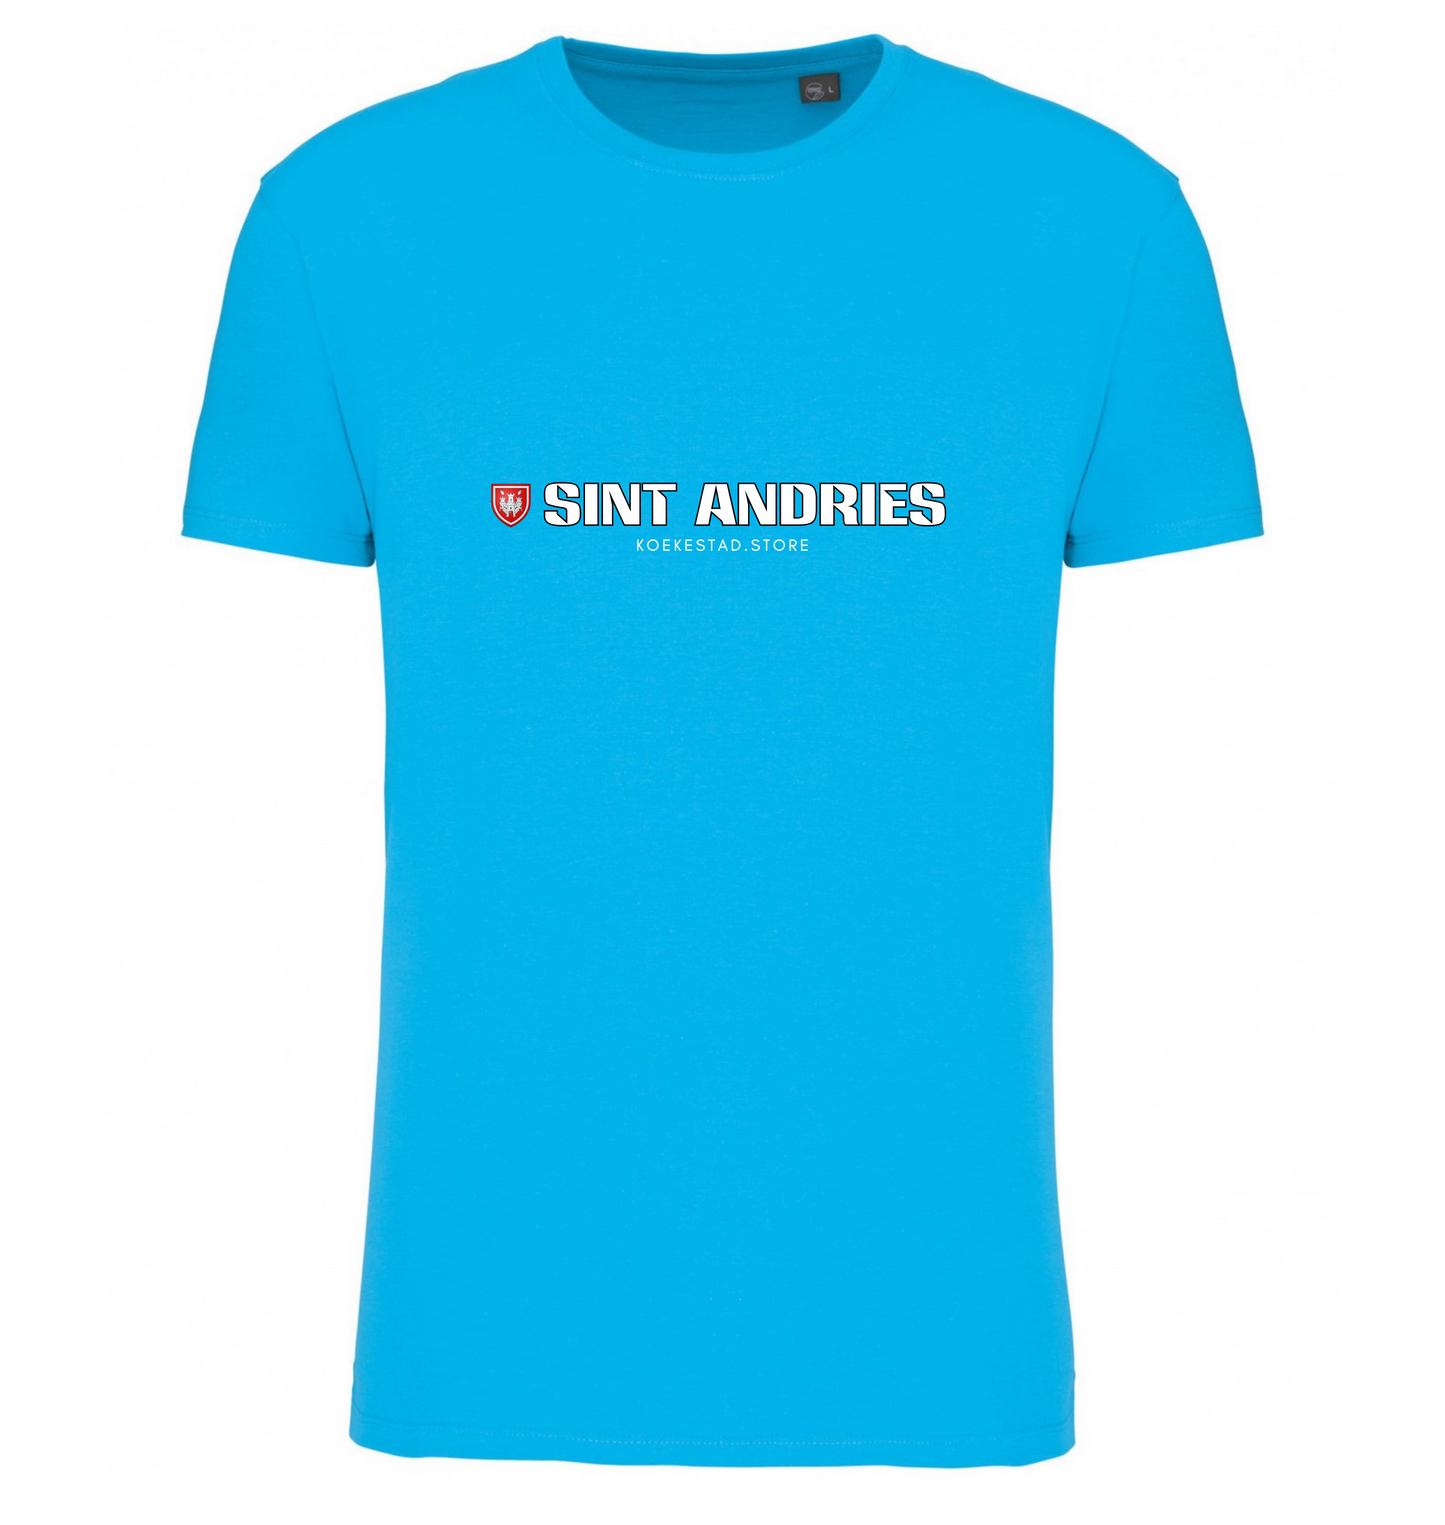 Premium T-Shirt - SINT ANDRIES wijk - 100 % Biokatoen Unisex